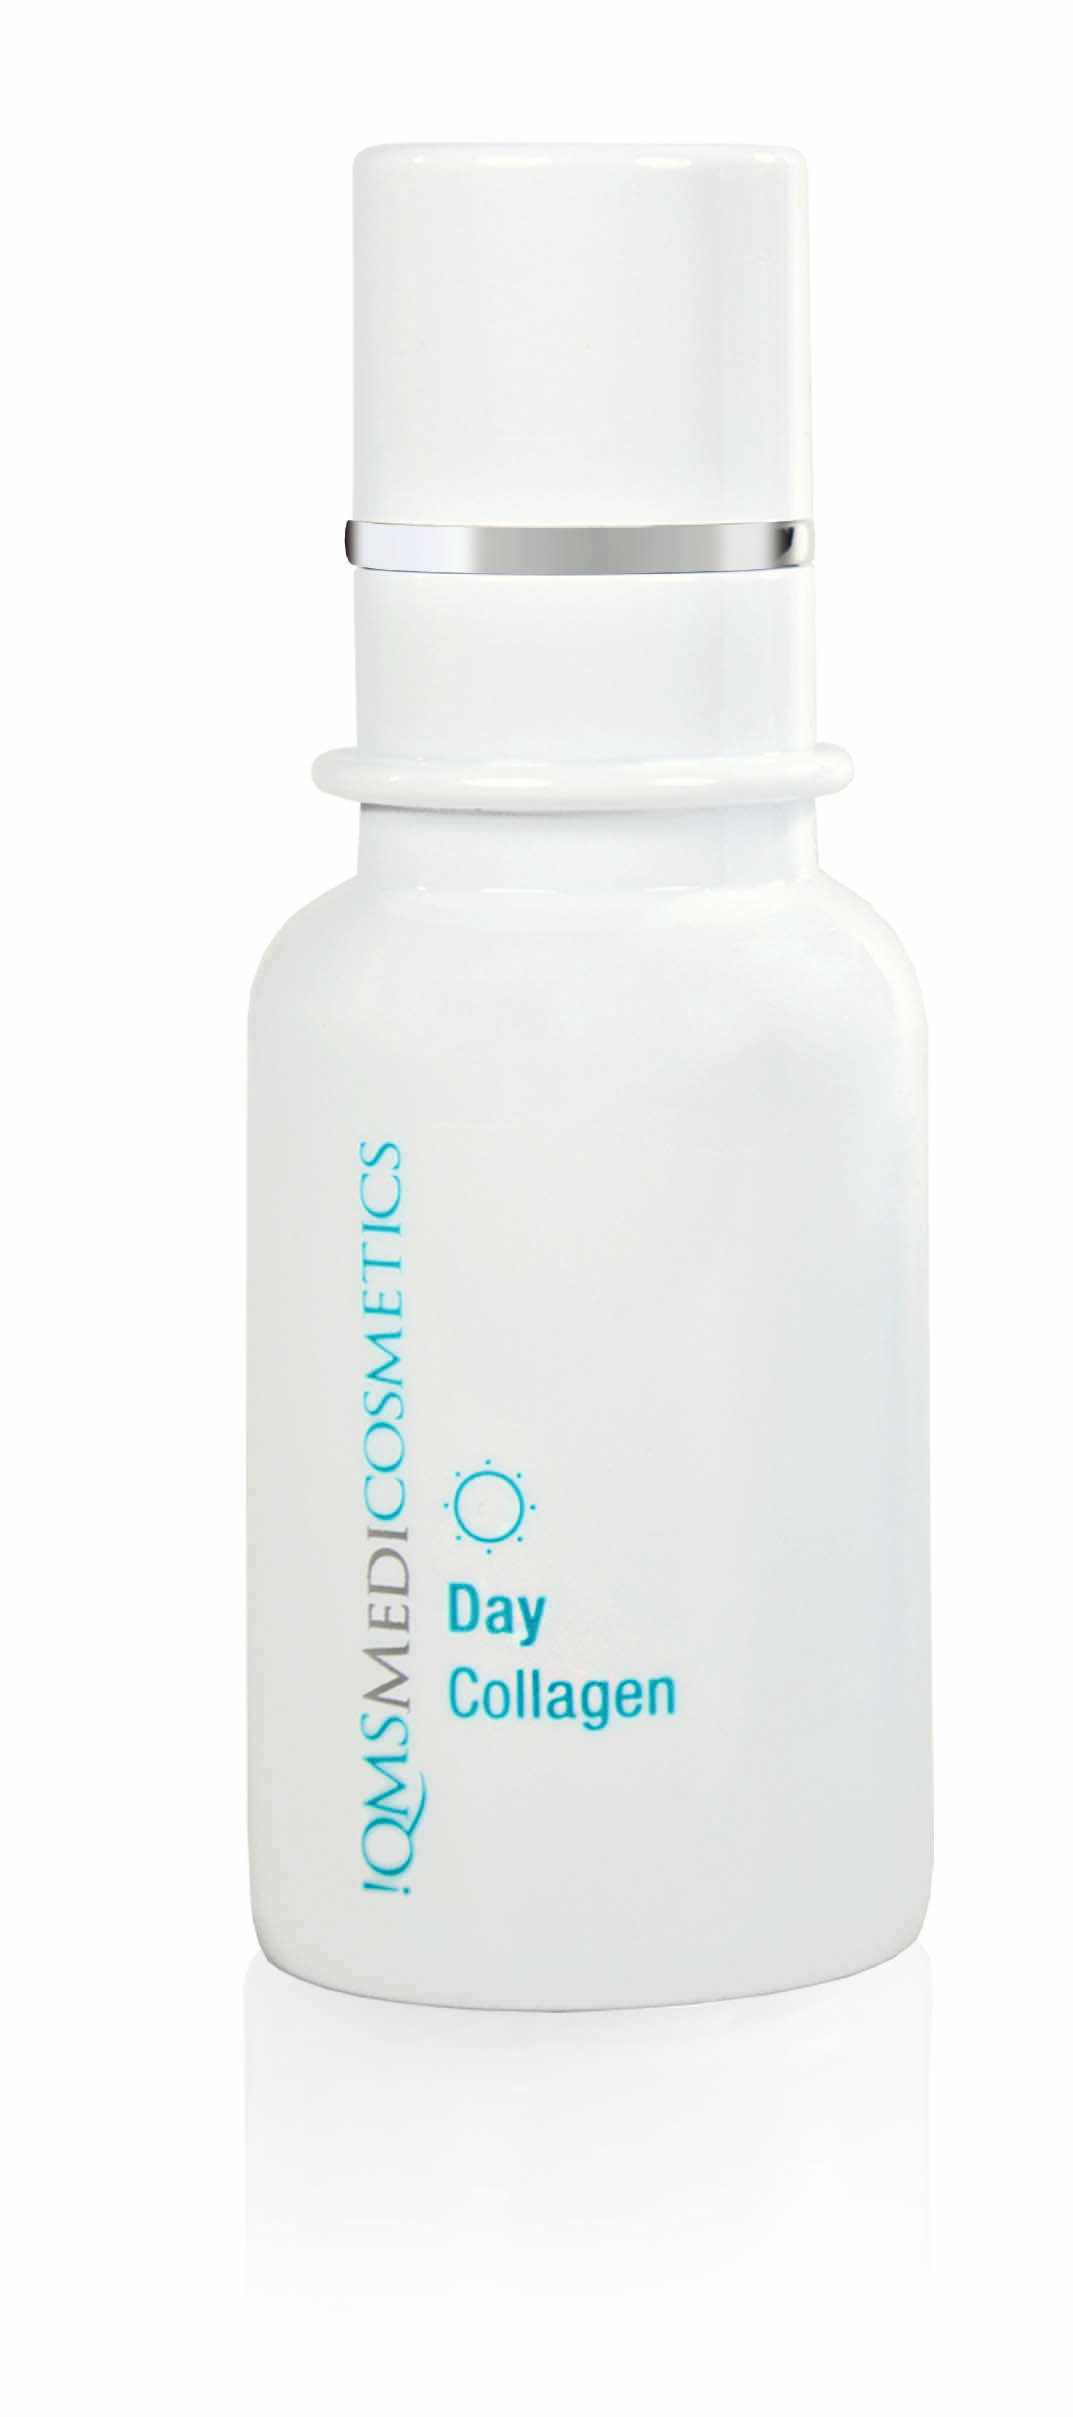 QMS Medicosmetics Day Collagen cream